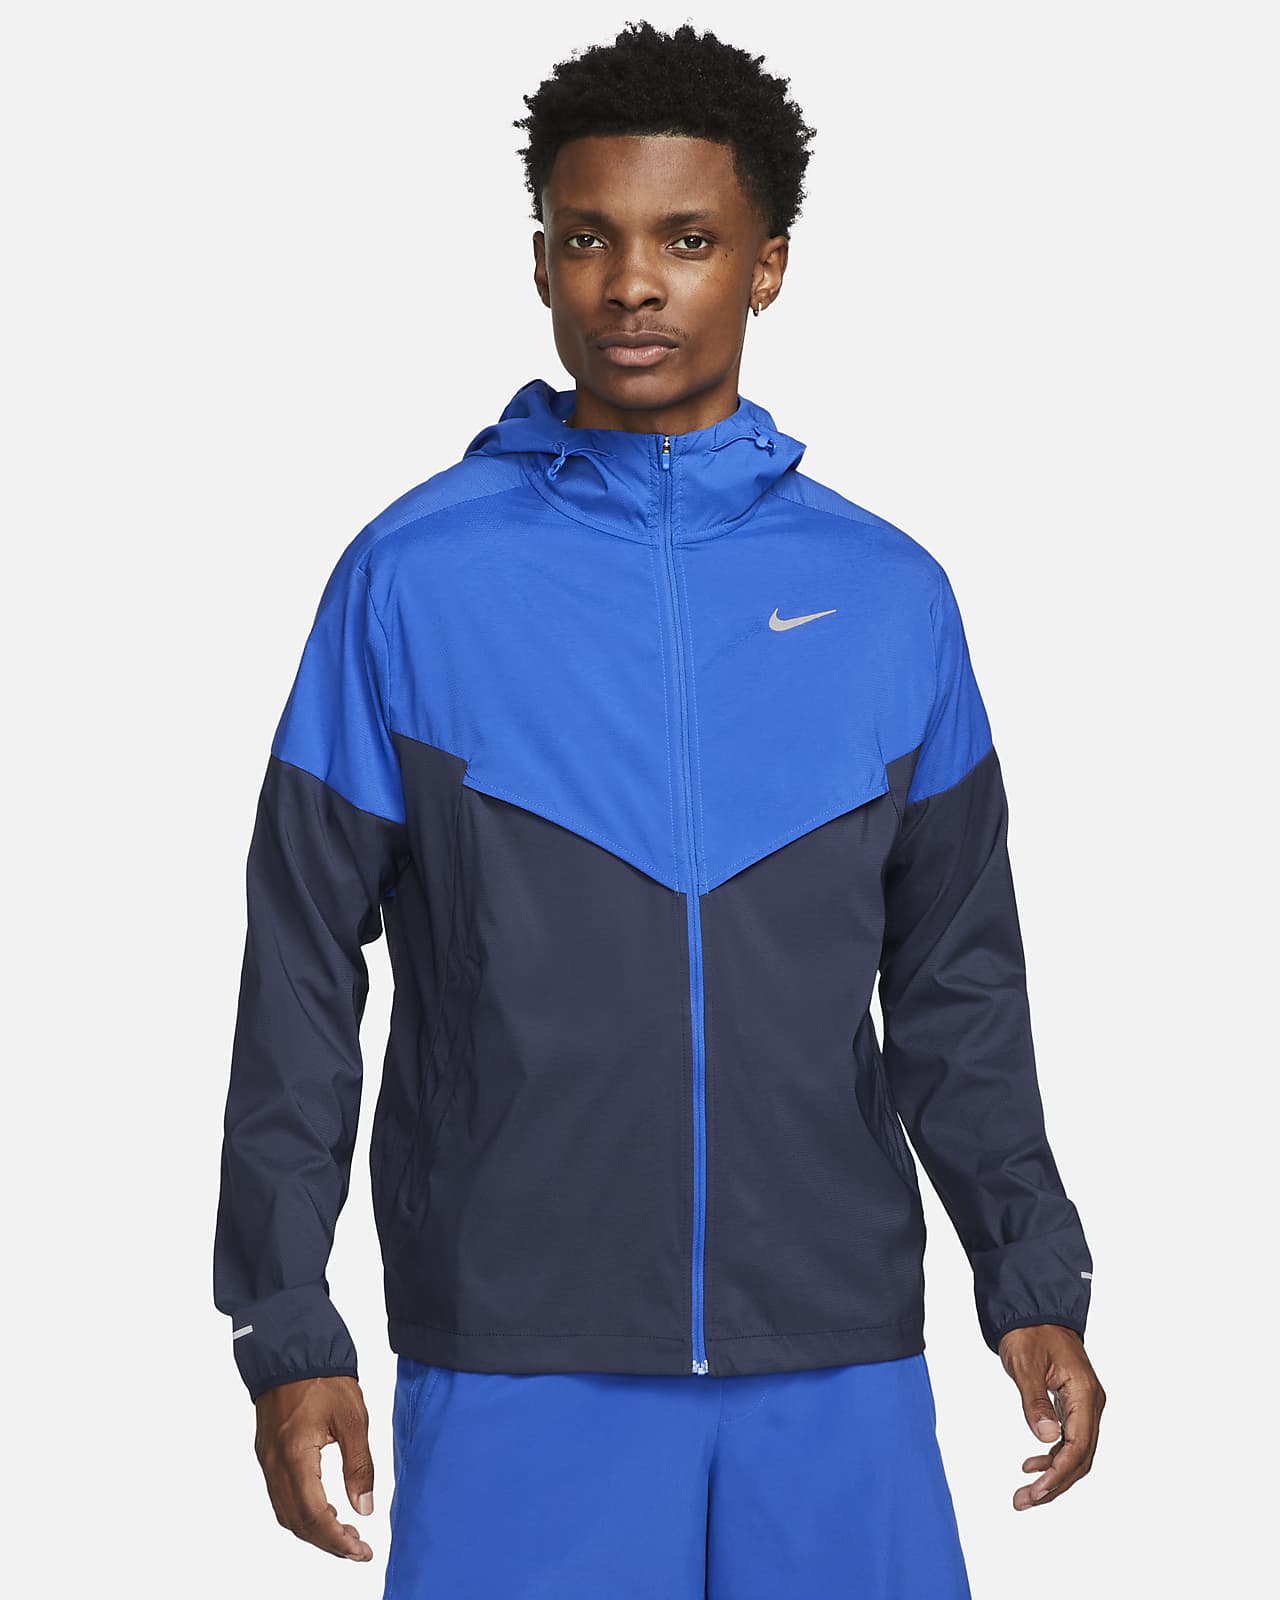 instant morgen baai Nike Windrunner Men's Repel Running Jacket. Nike AT